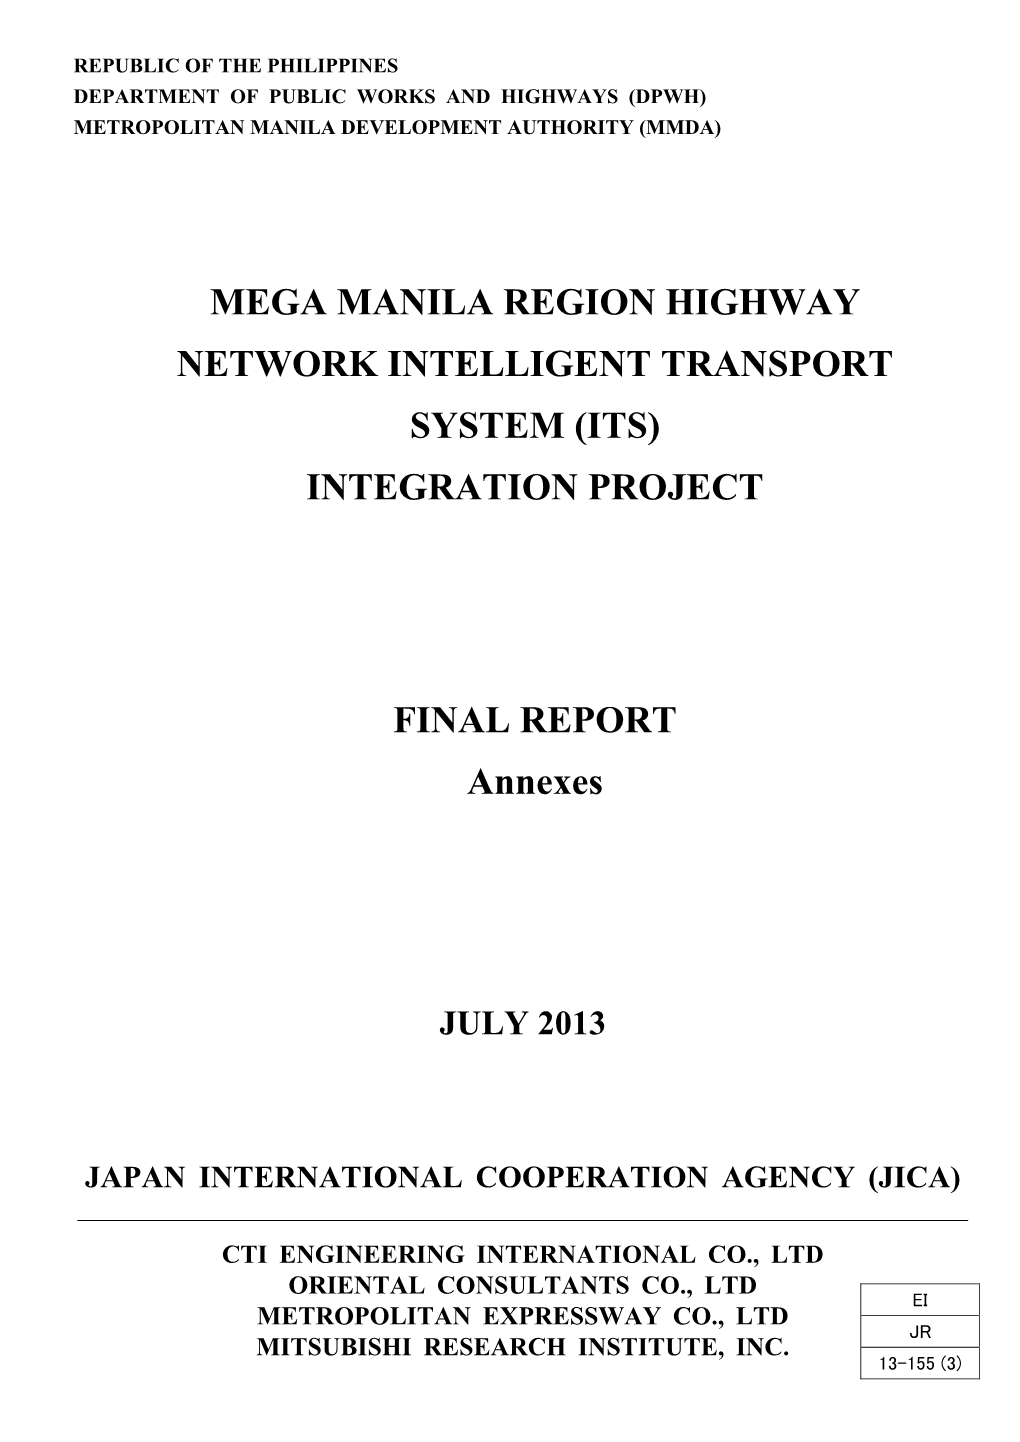 Mega Manila Region Highway Network Intelligent Transport System (Its) Integration Project